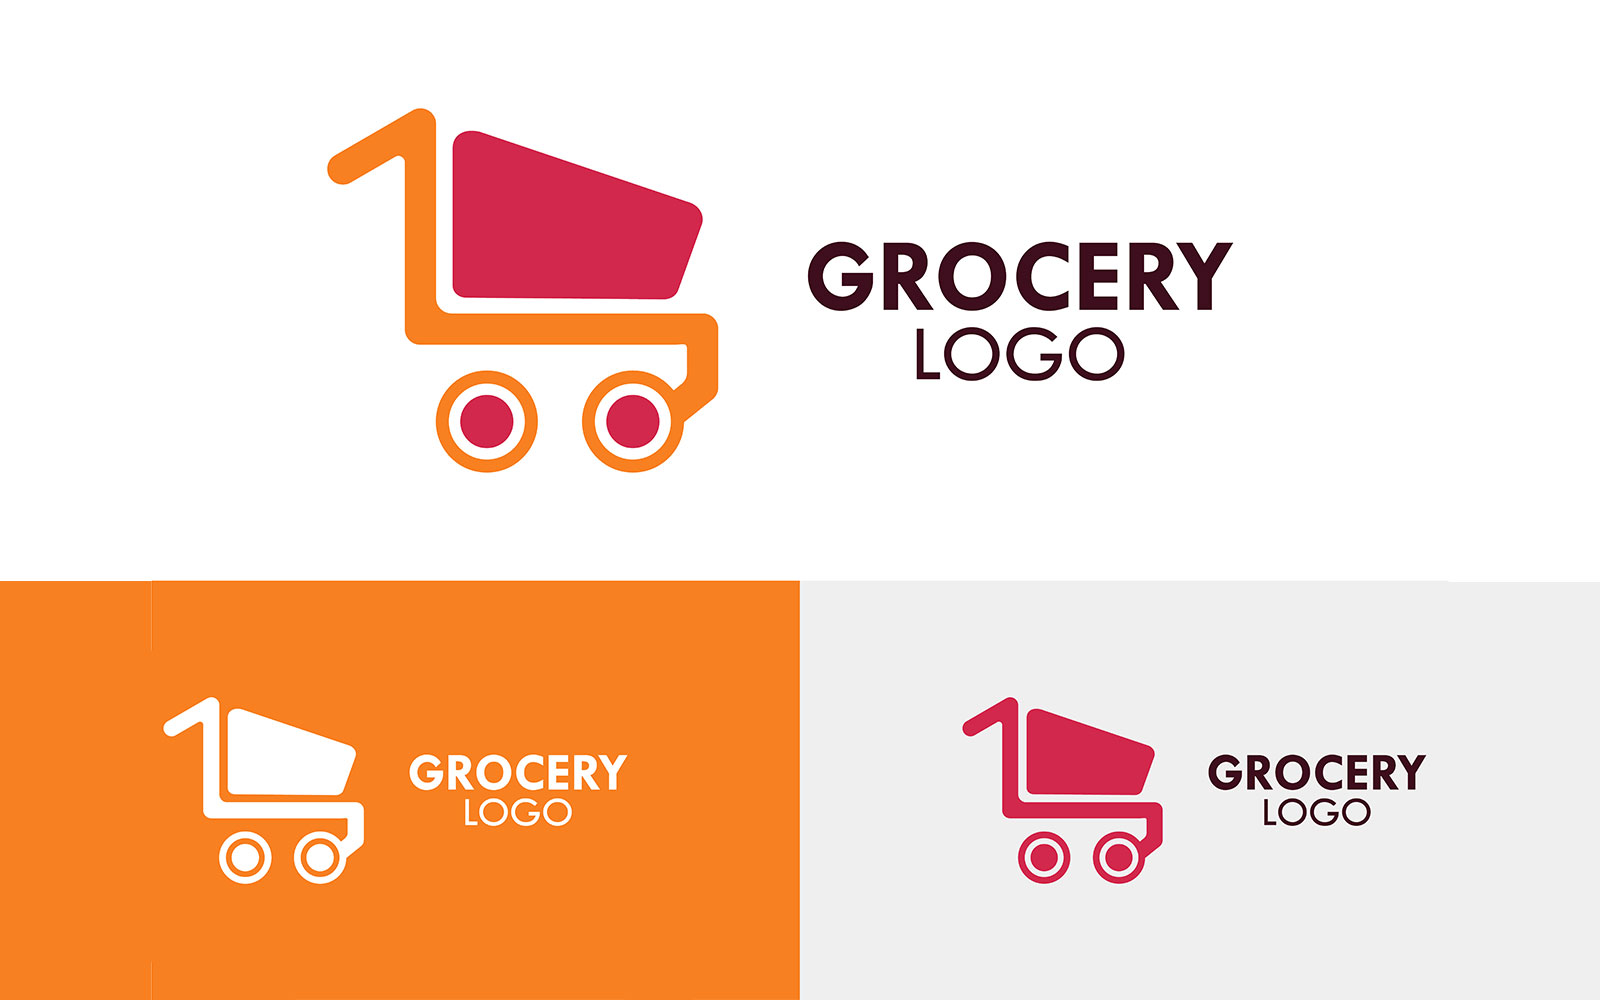 Three grocery logos options.